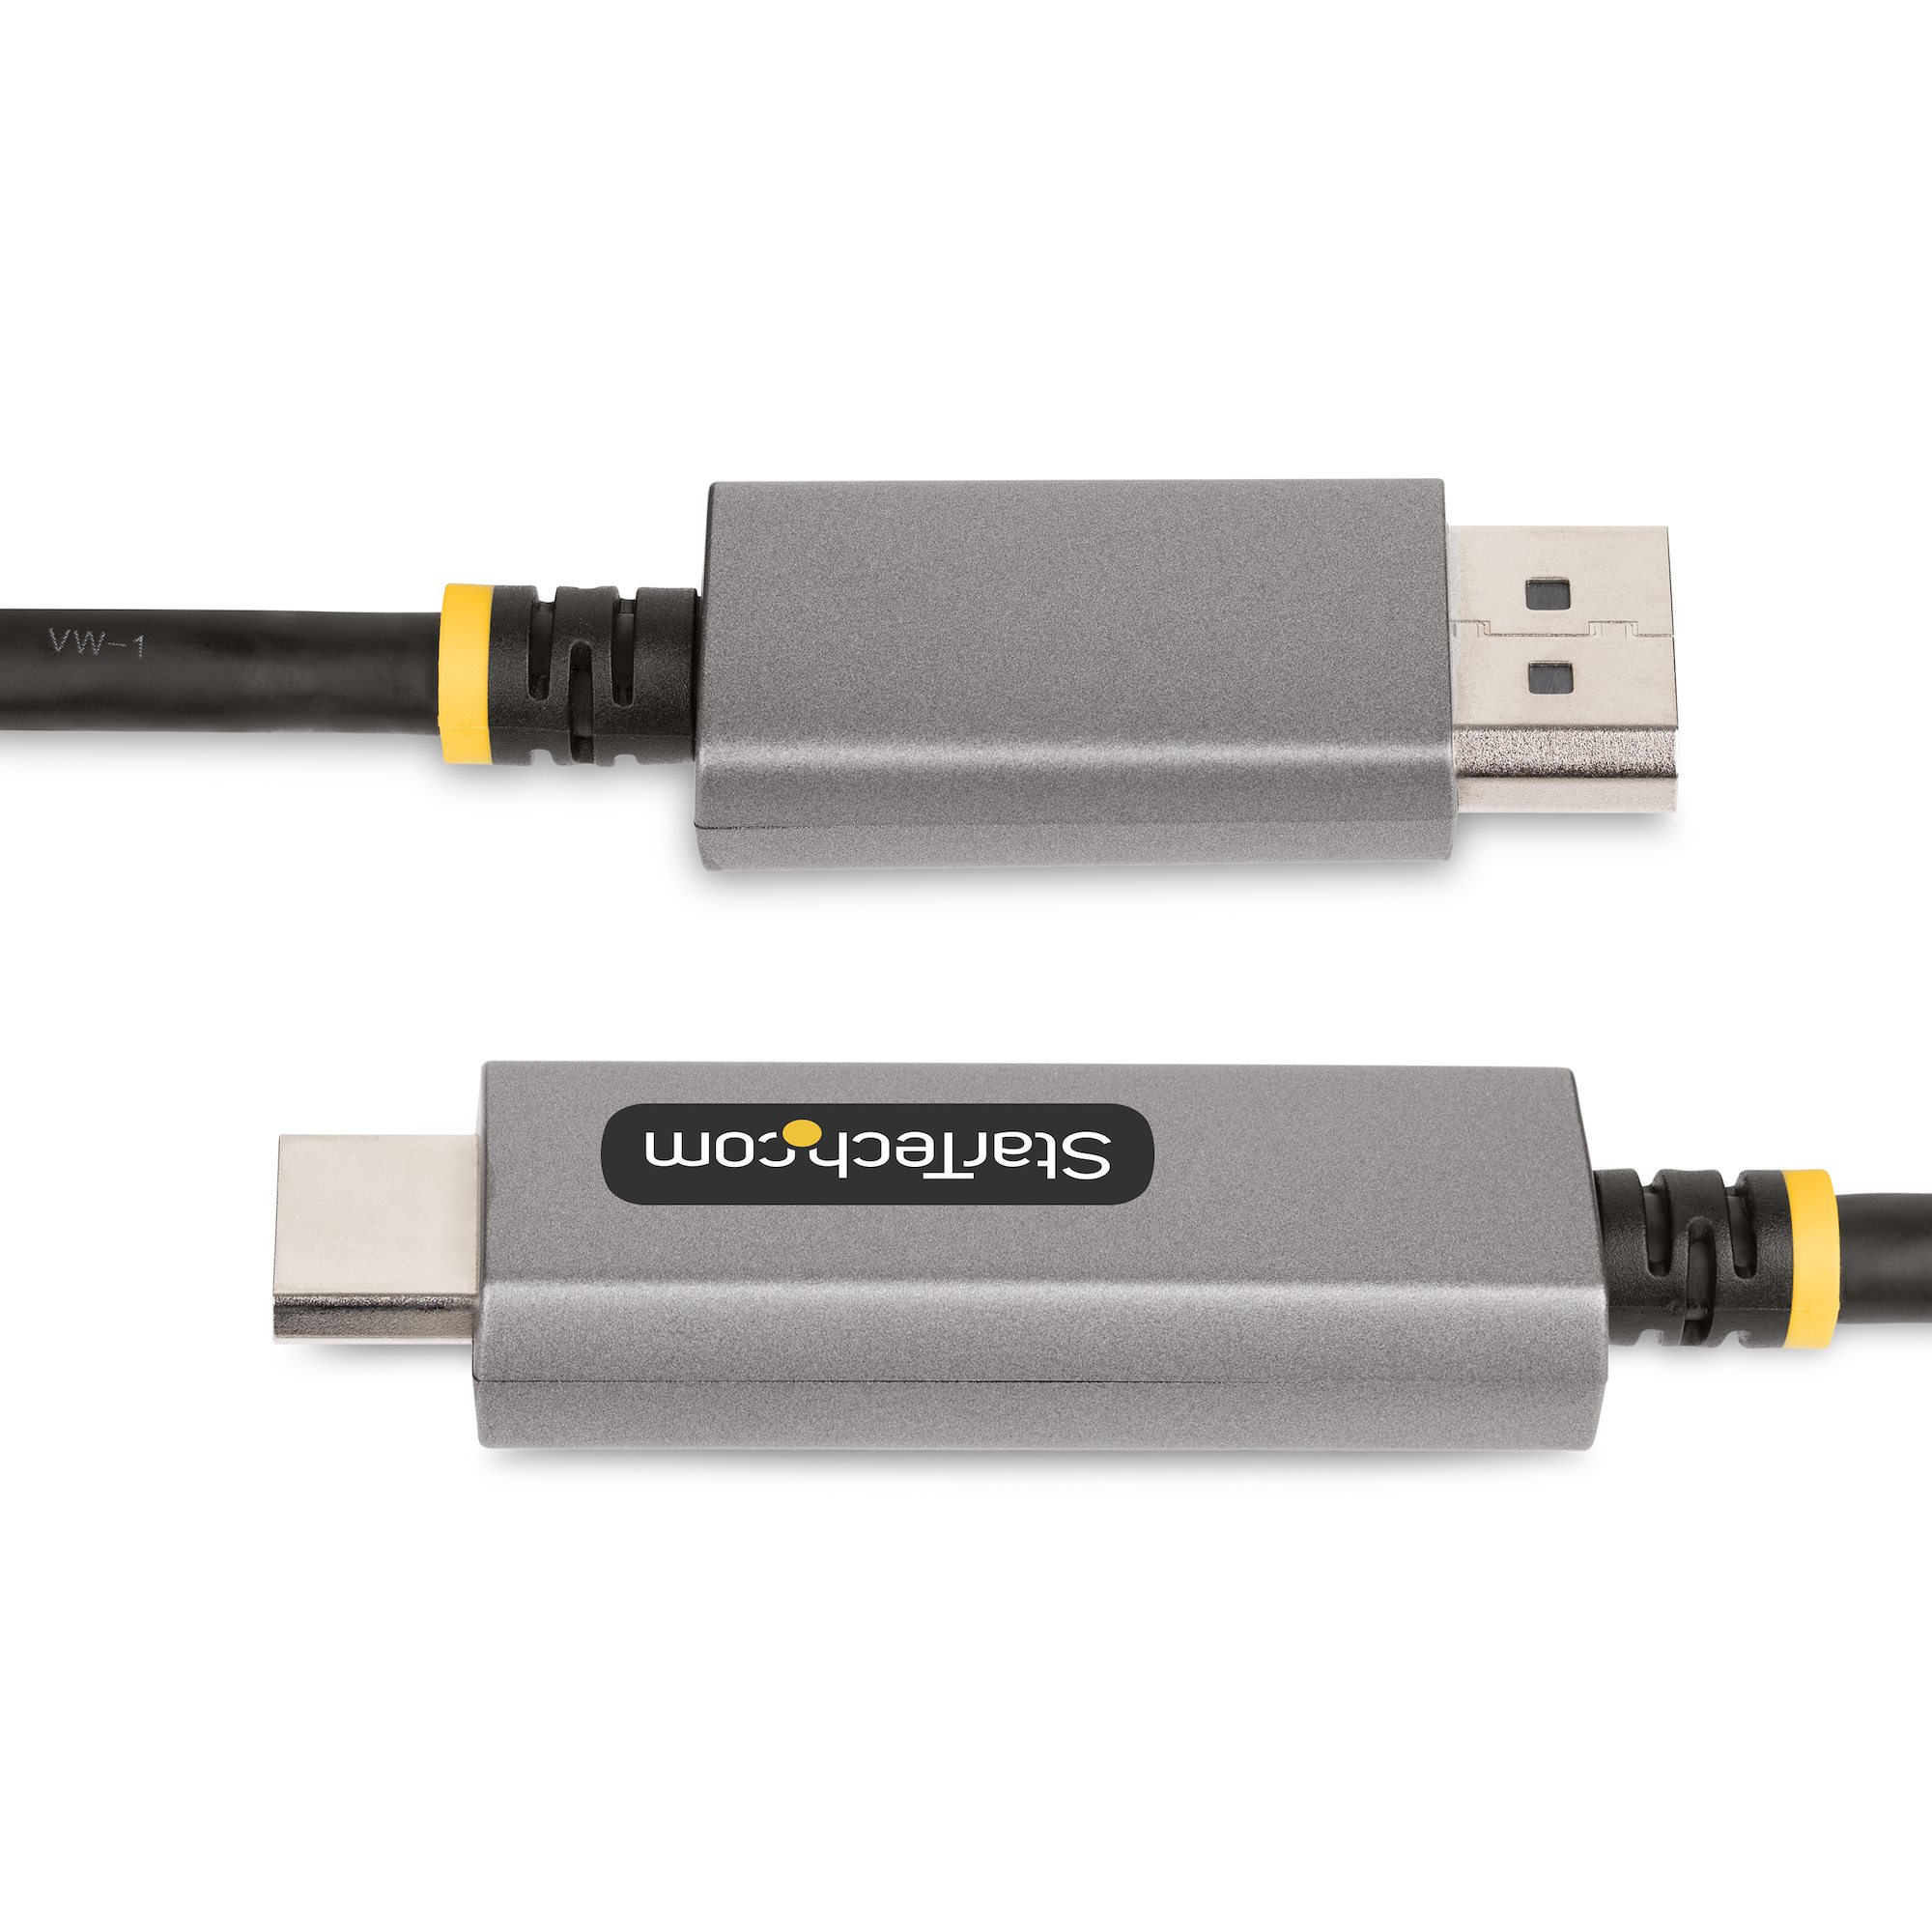 Câble Adaptateur DisplayPort vers HDMI, 8K 60Hz, 4K 144Hz, HDR10, DP 1.4  vers HDMI 2.1 - Convertisseur Vidéo Actif, Adaptateur DisplayPort vers